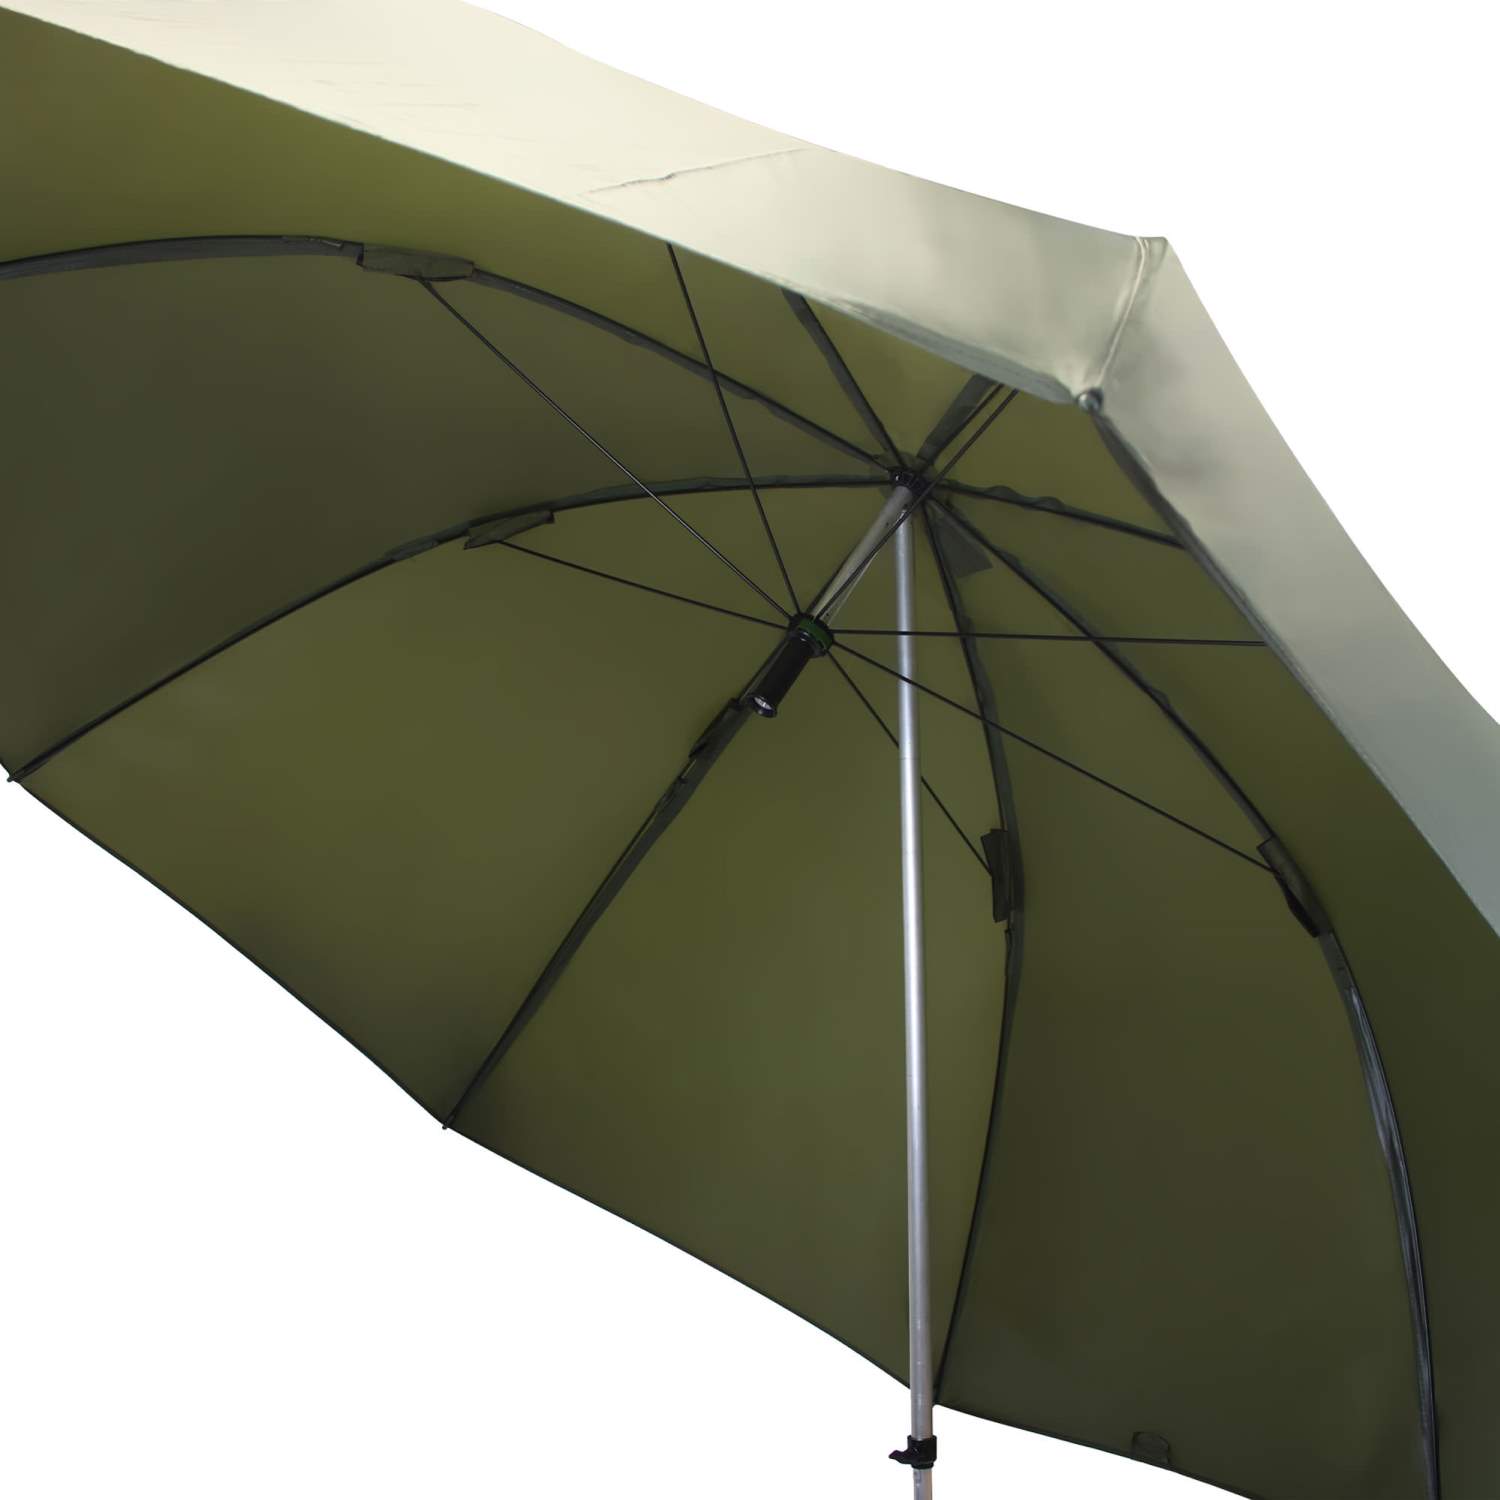 Nubrolly PVC Angelschirm 2,50m Angel Regenschirm Angler Schirmzelt Brolly Schirm